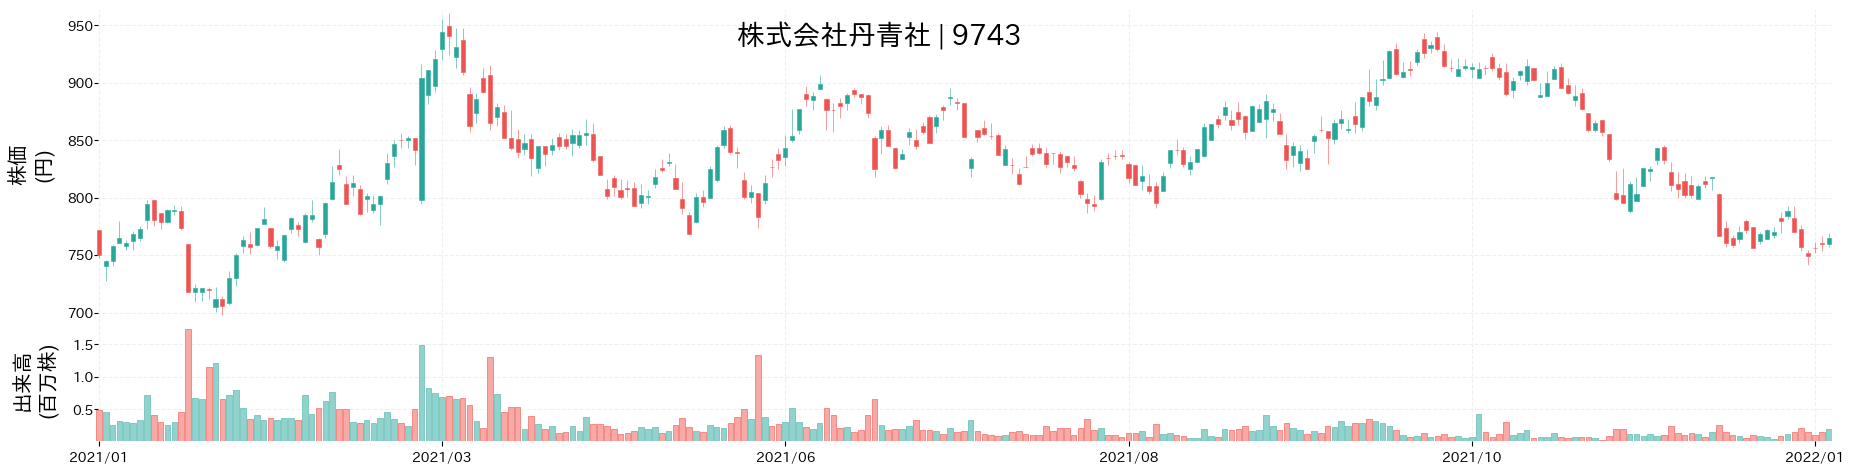 丹青社の株価推移(2021)